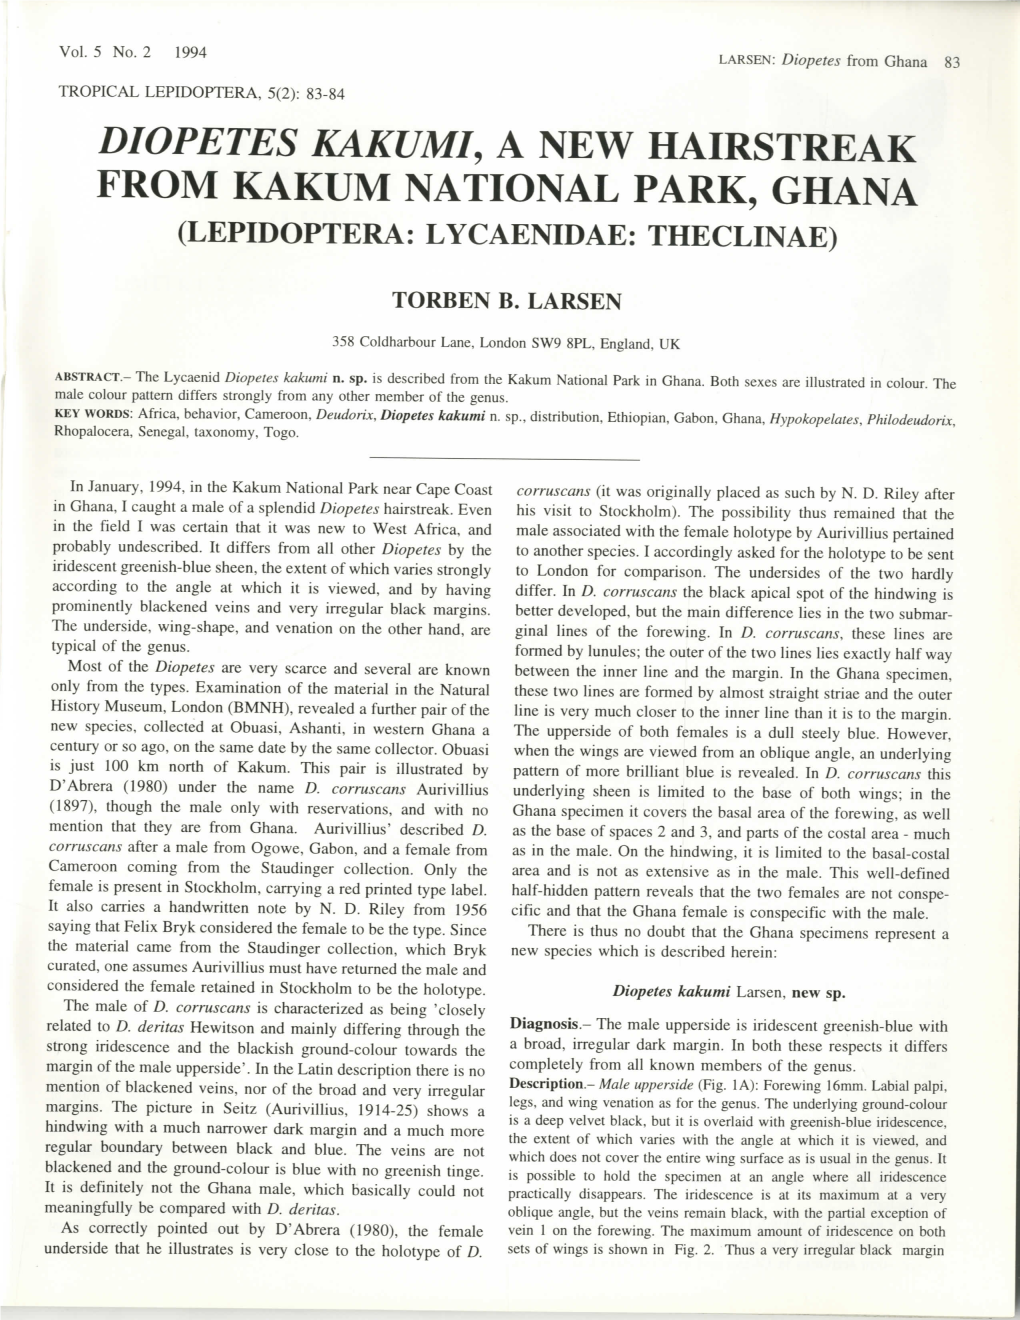 Larsen, T. B. 1994. Diopetes Kakumi, a New Hairstreak from Kakum